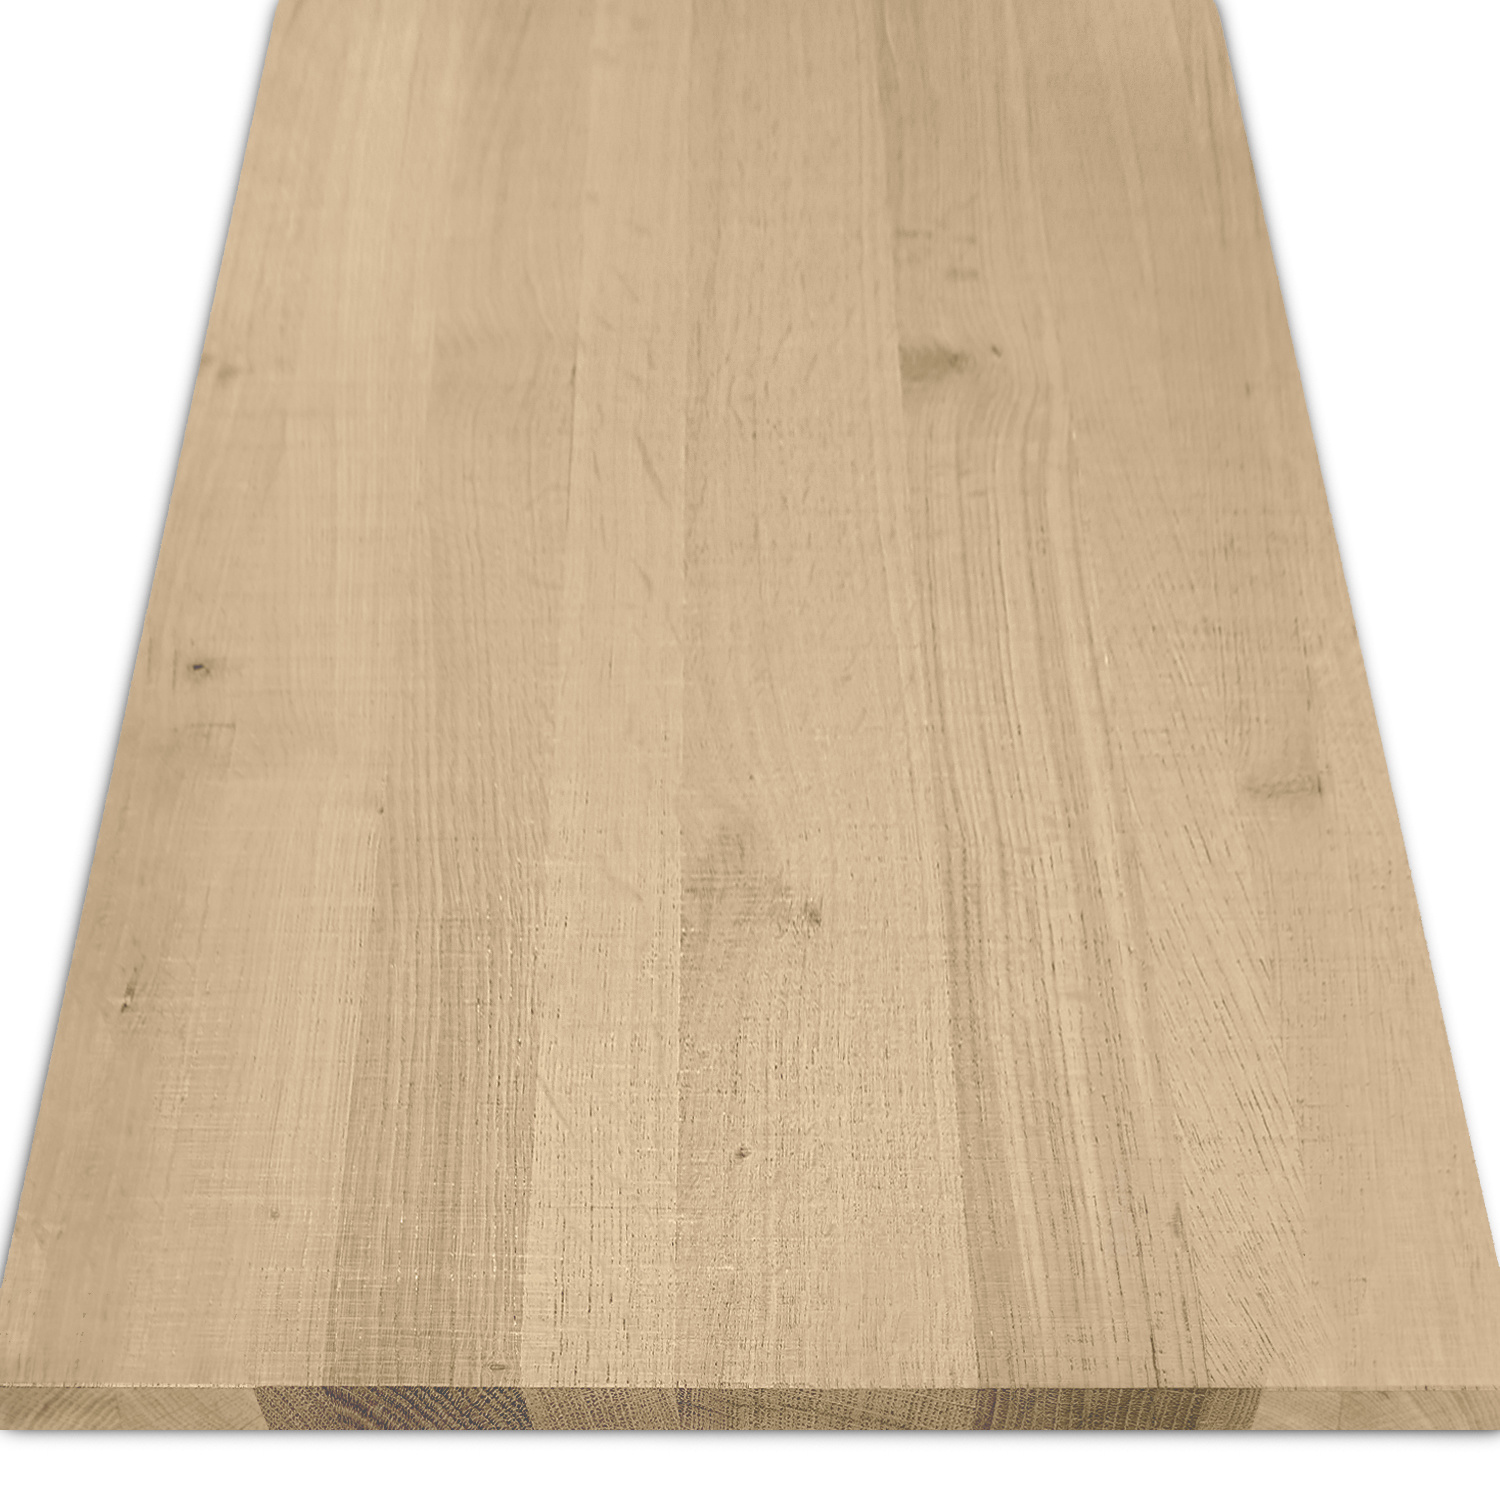  Leimholzplatte Eiche nach Maß - 2 cm dick - Eichenholz rustikal - Sägerau Optik - Eiche Massivholzplatte - verleimt & künstlich getrocknet (HF 8-12%) - 15-120x20-350 cm